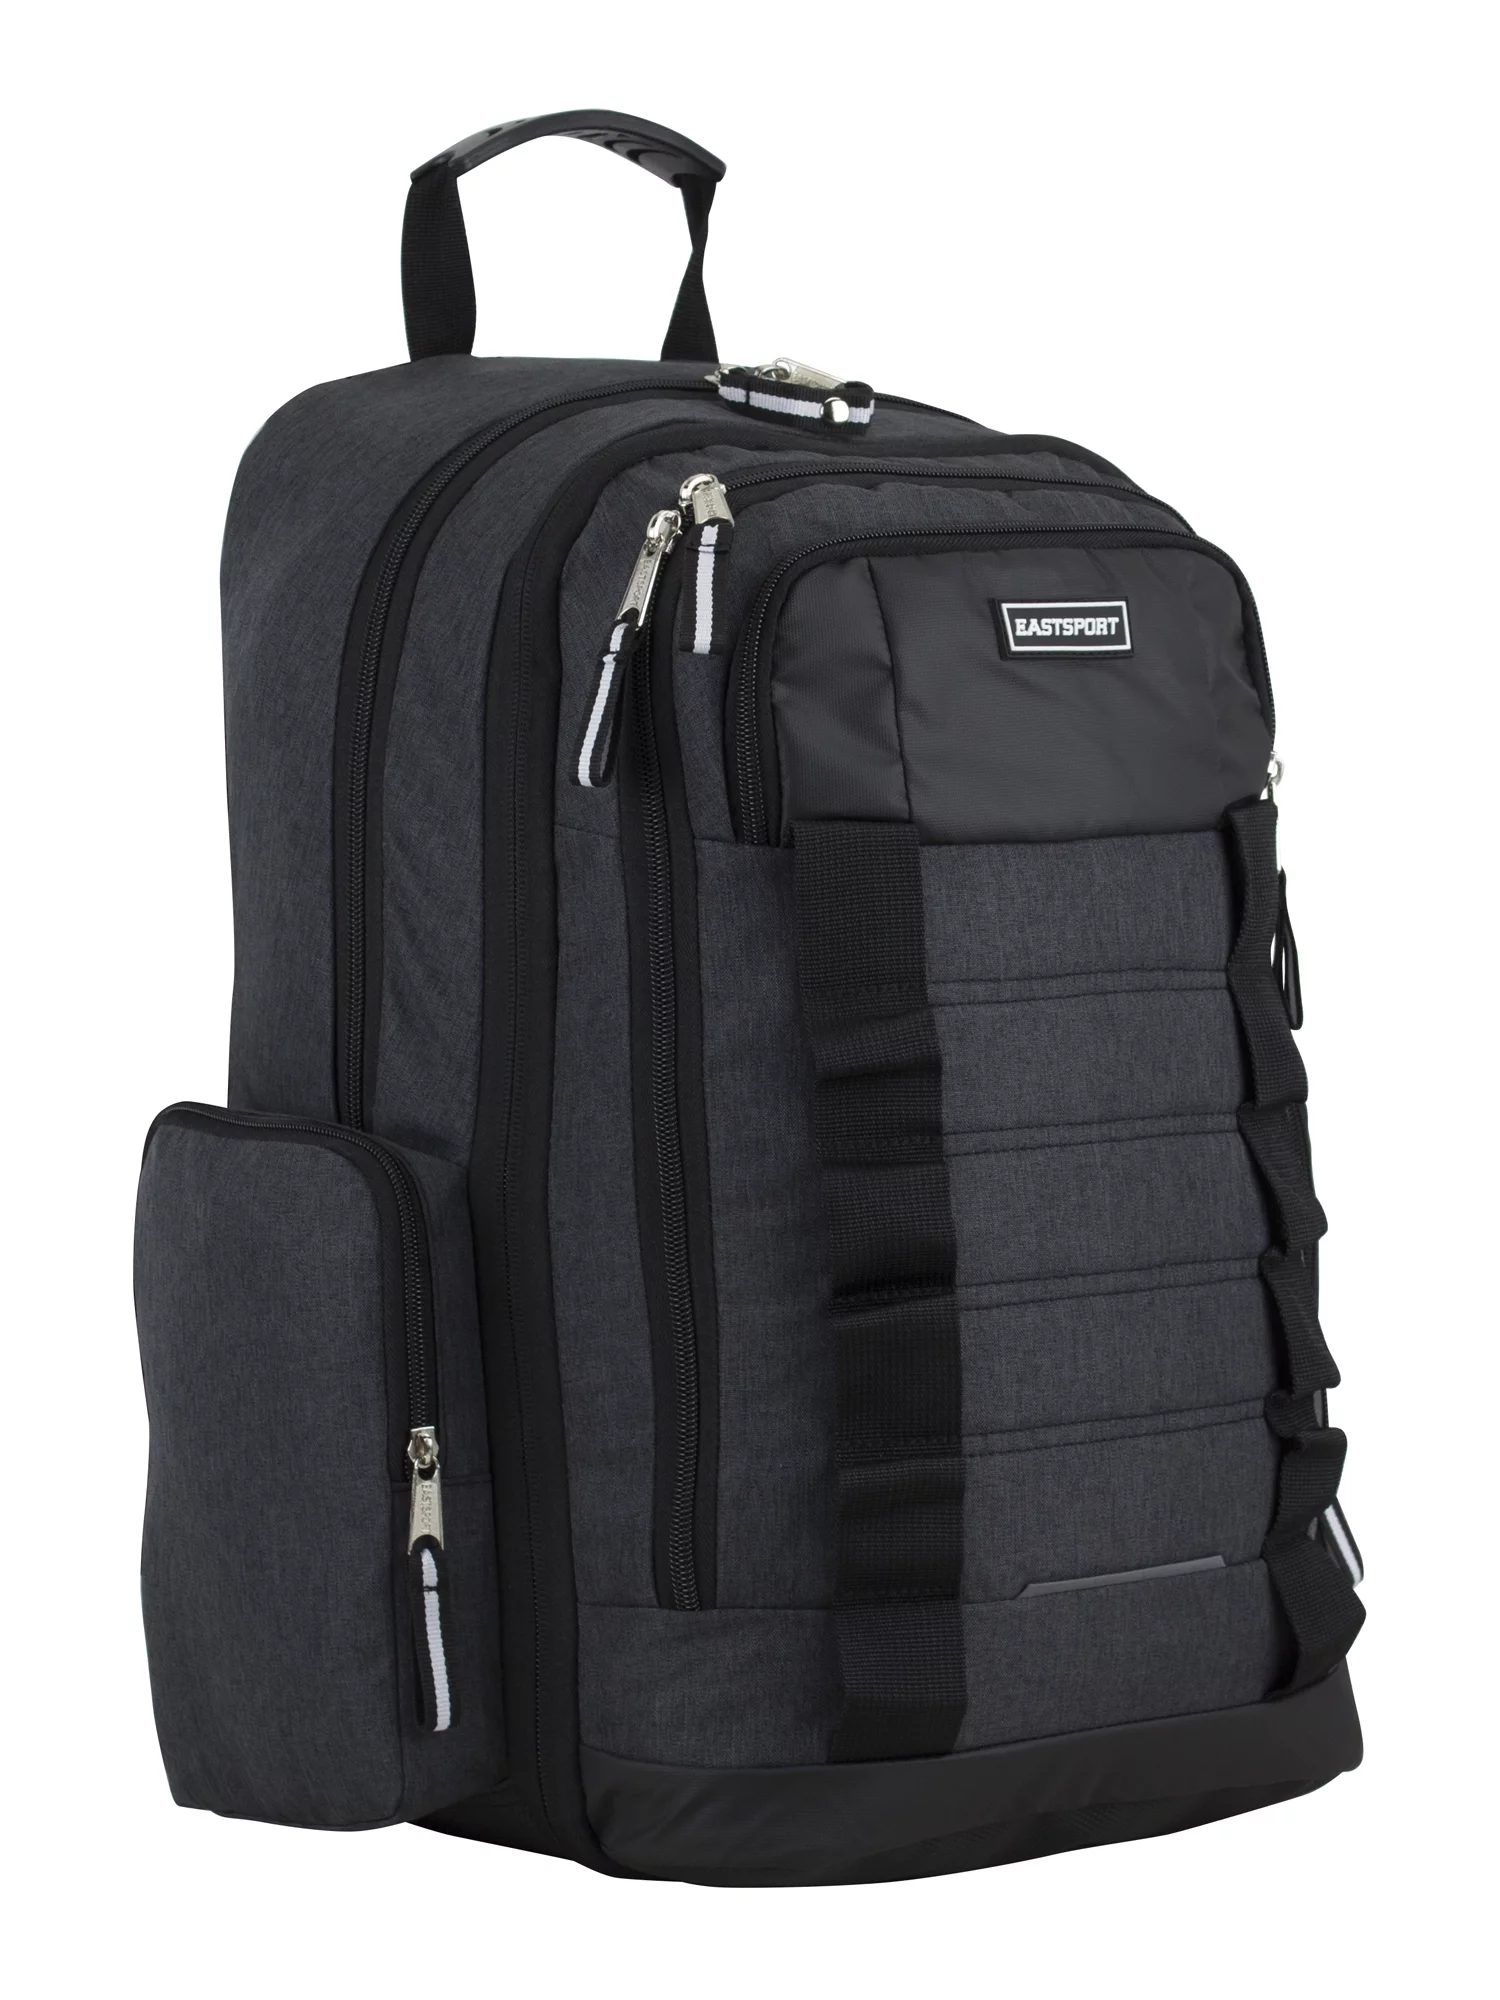 Eastsport Unisex Expandable Team Backpack, Dark Grey